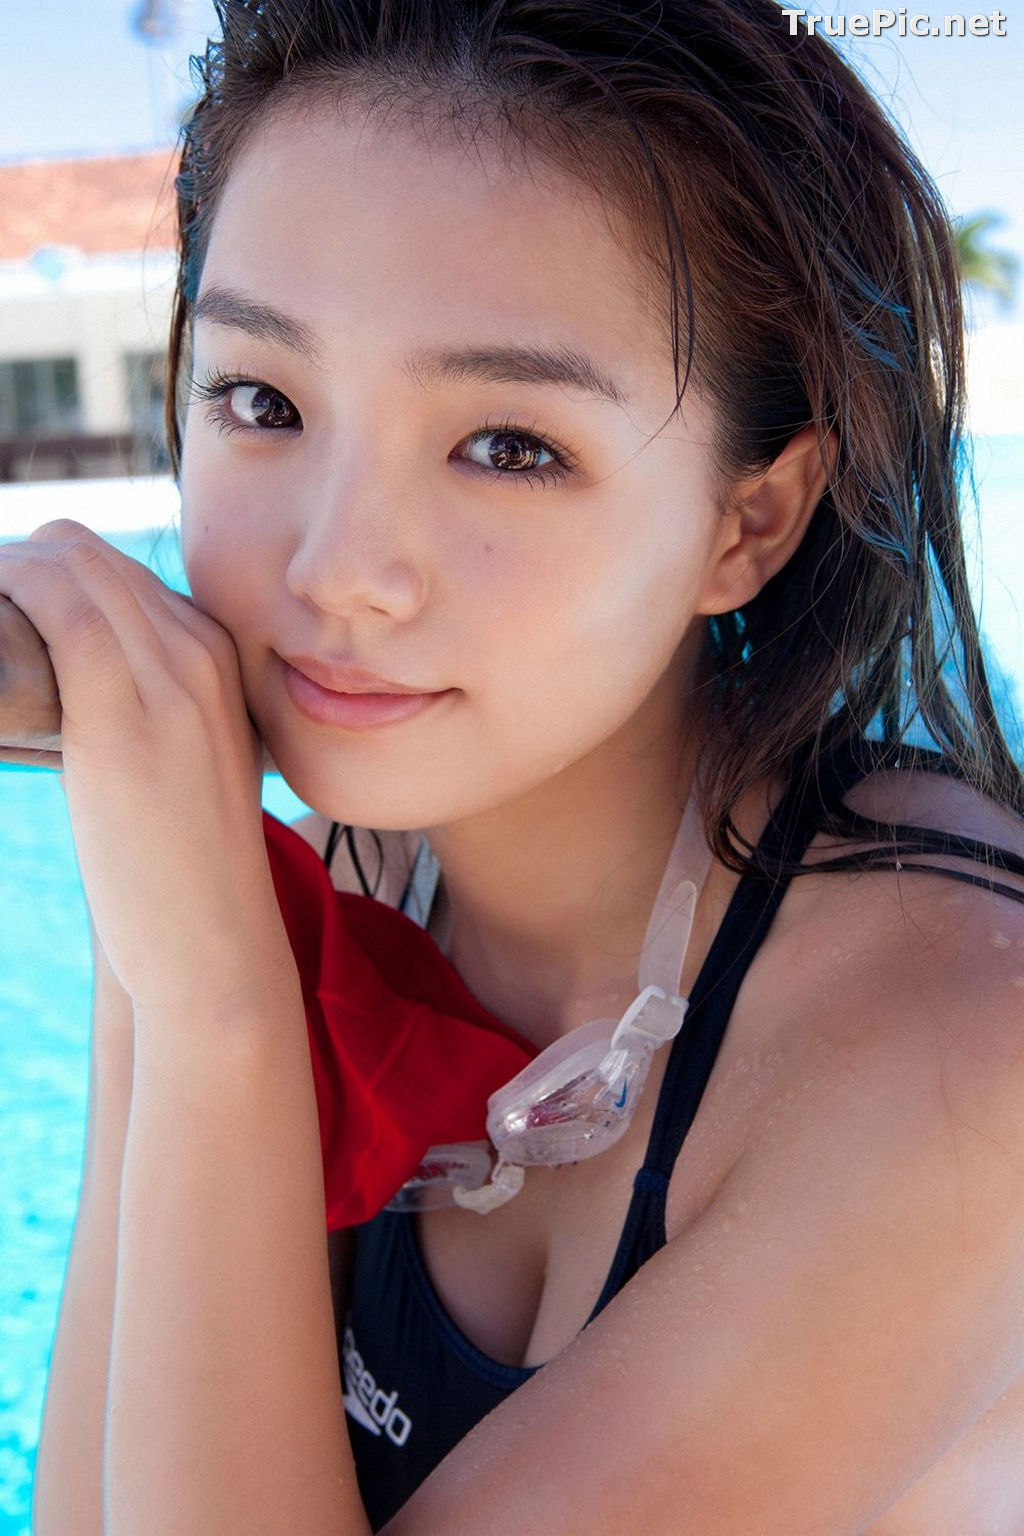 Image [YS Web] Vol.465 – Japanese Model Ai Shinozaki – Mermaid of Love Photo Album - TruePic.net - Picture-27